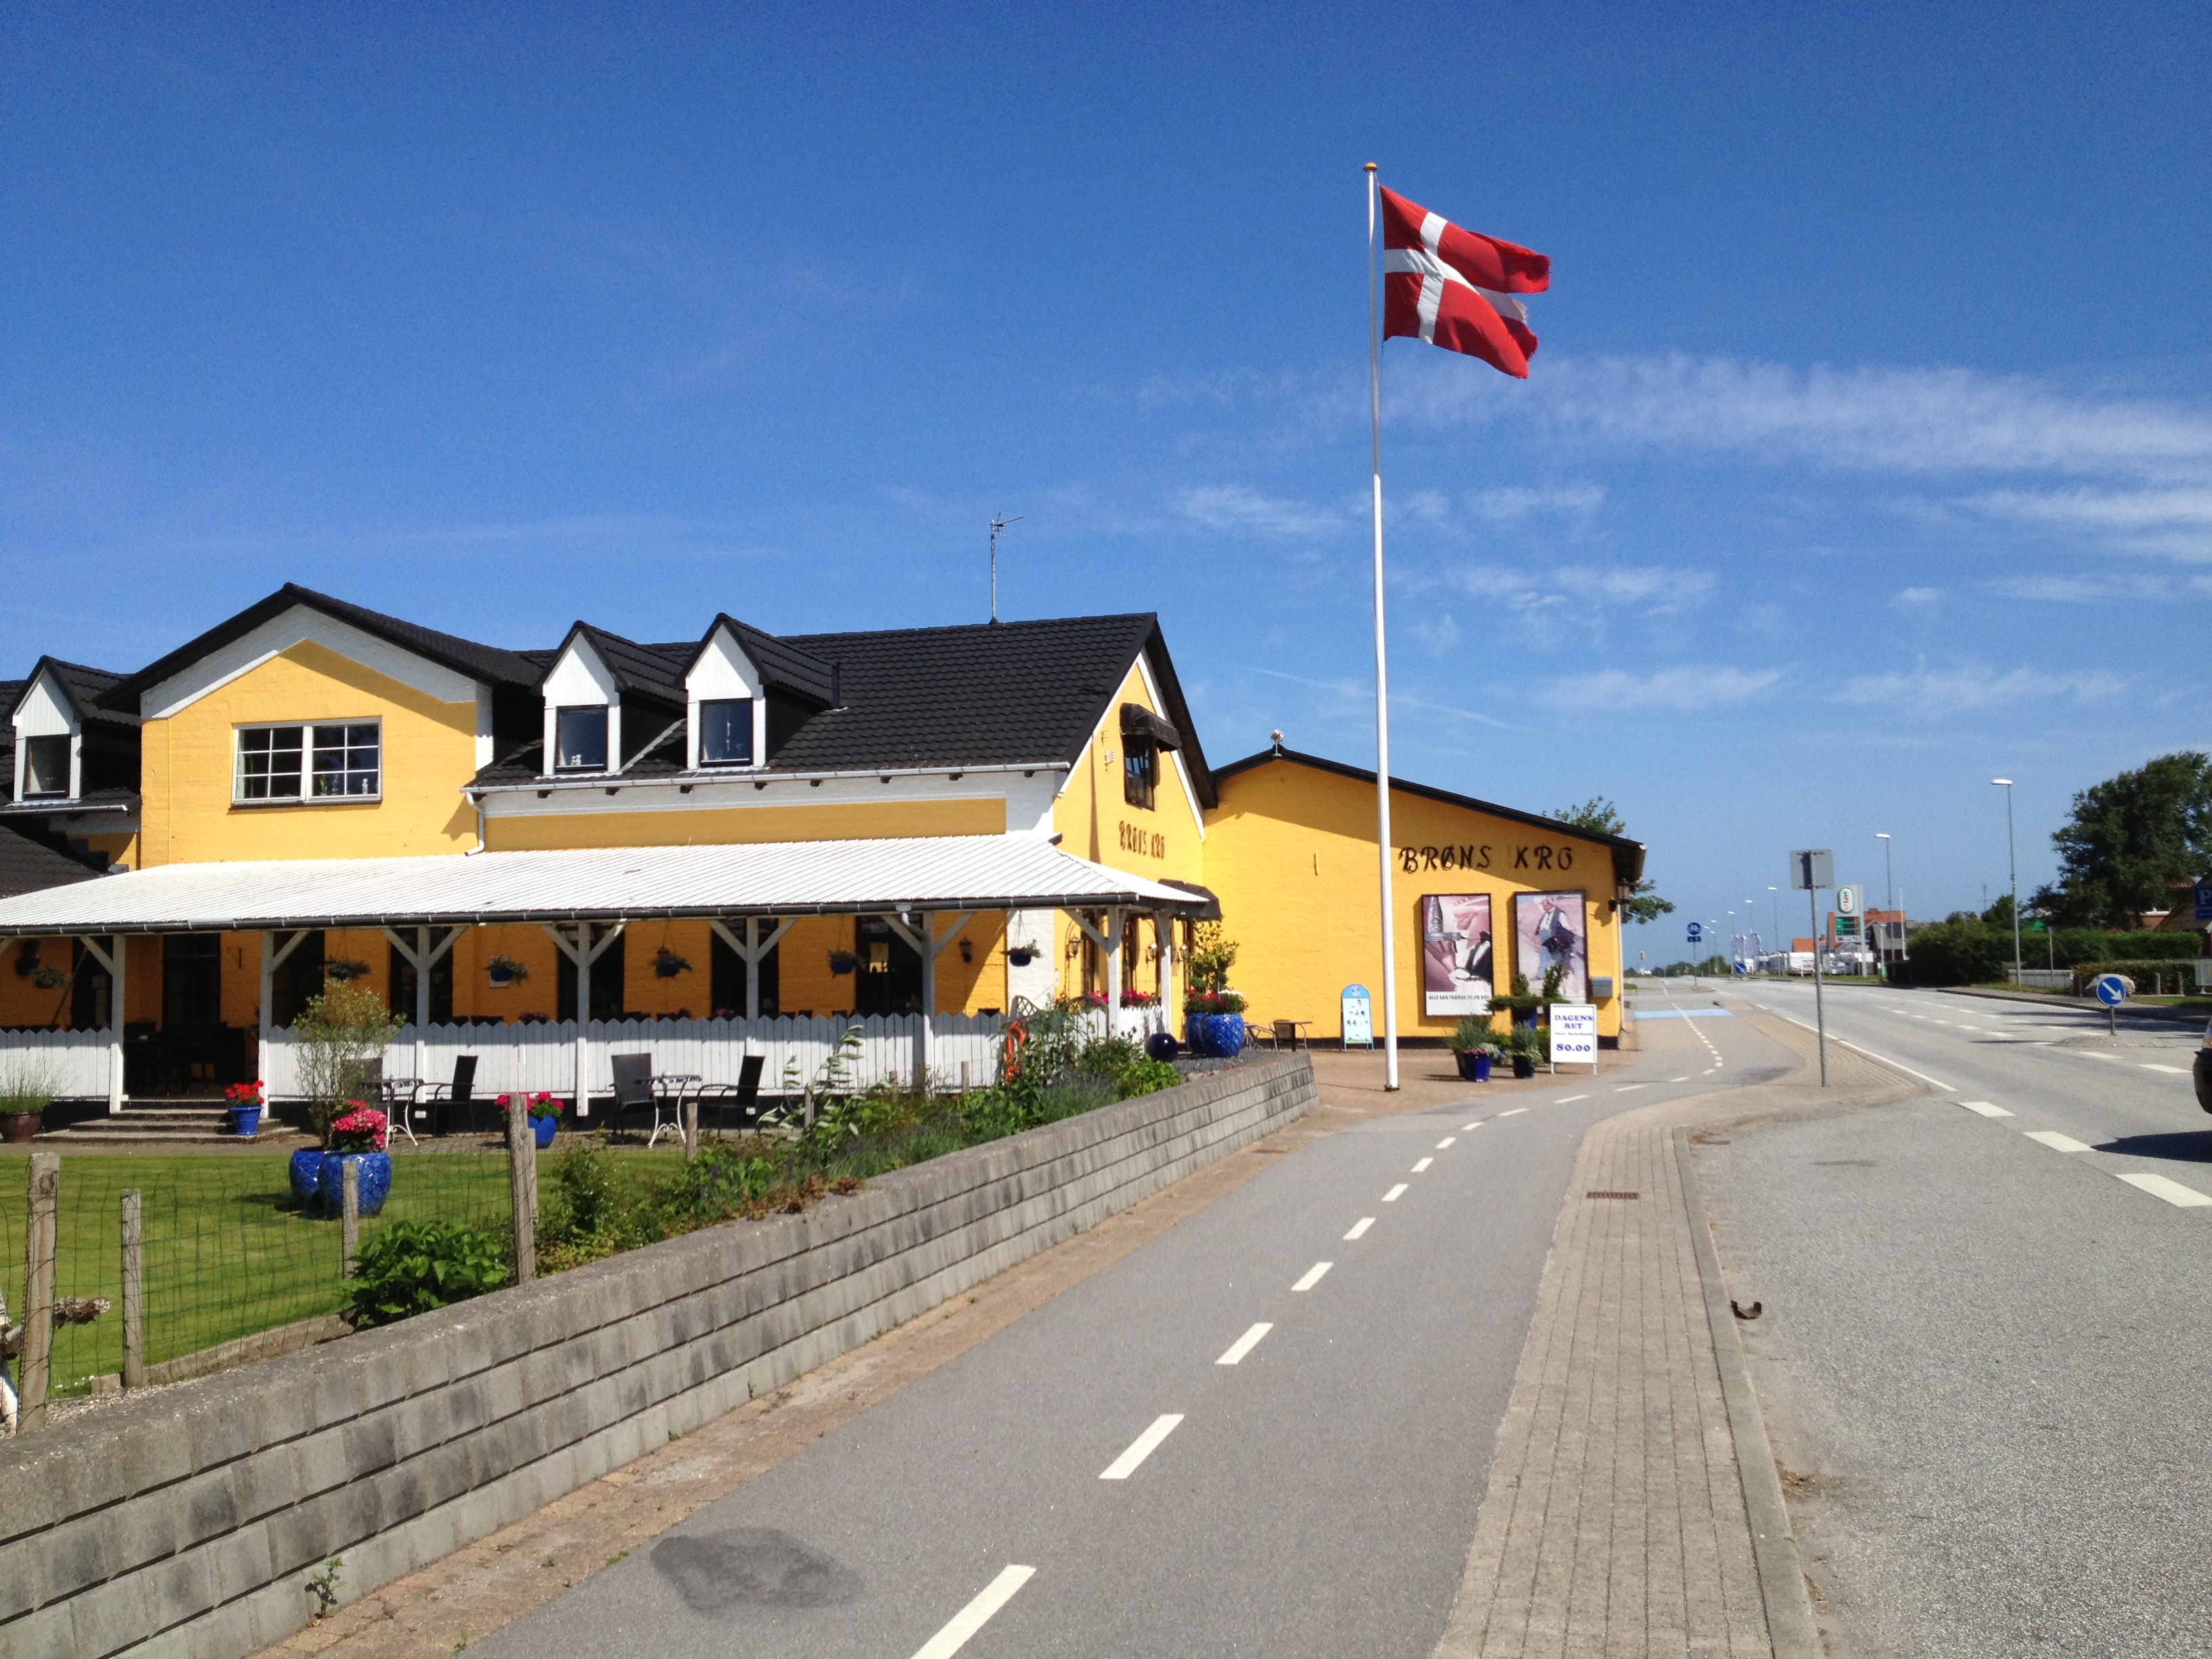 Sort Sol & Sønderjylland